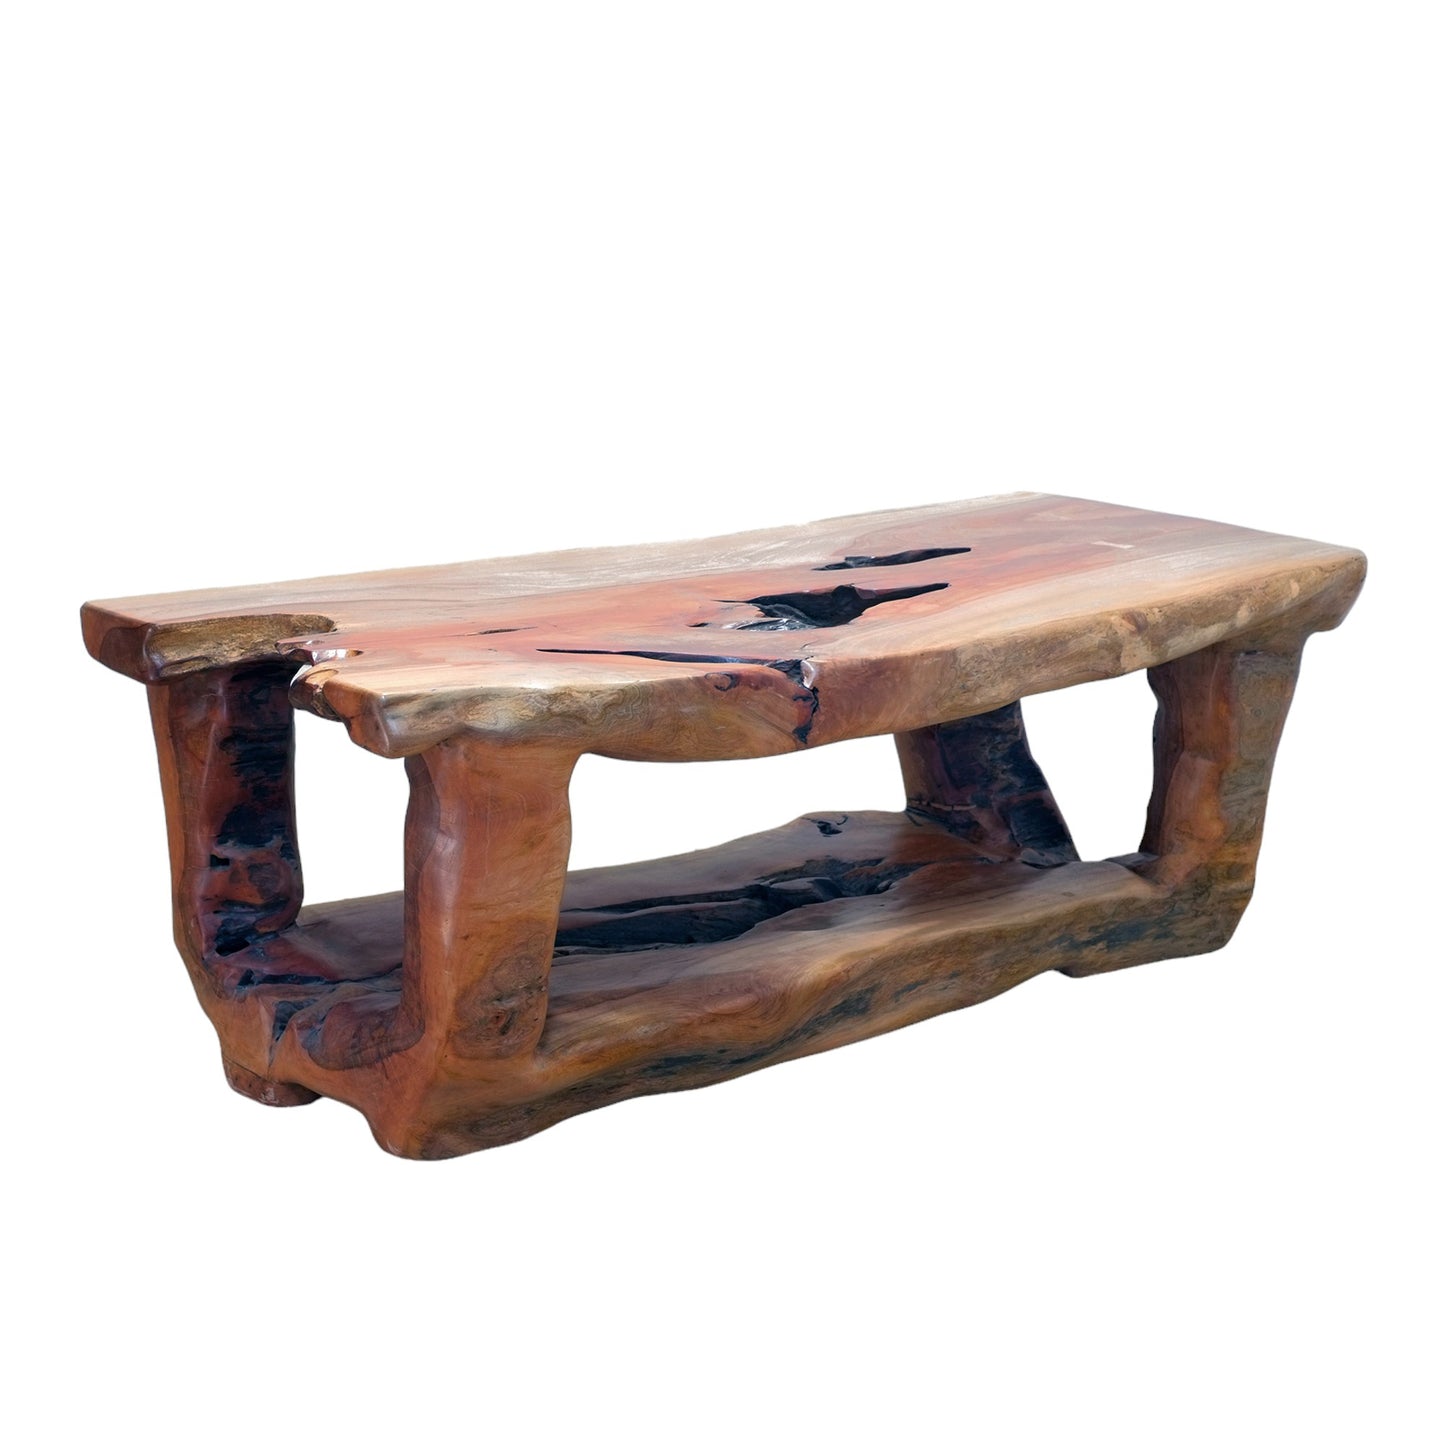 Ingas Wood Table - The Beast with Shelf